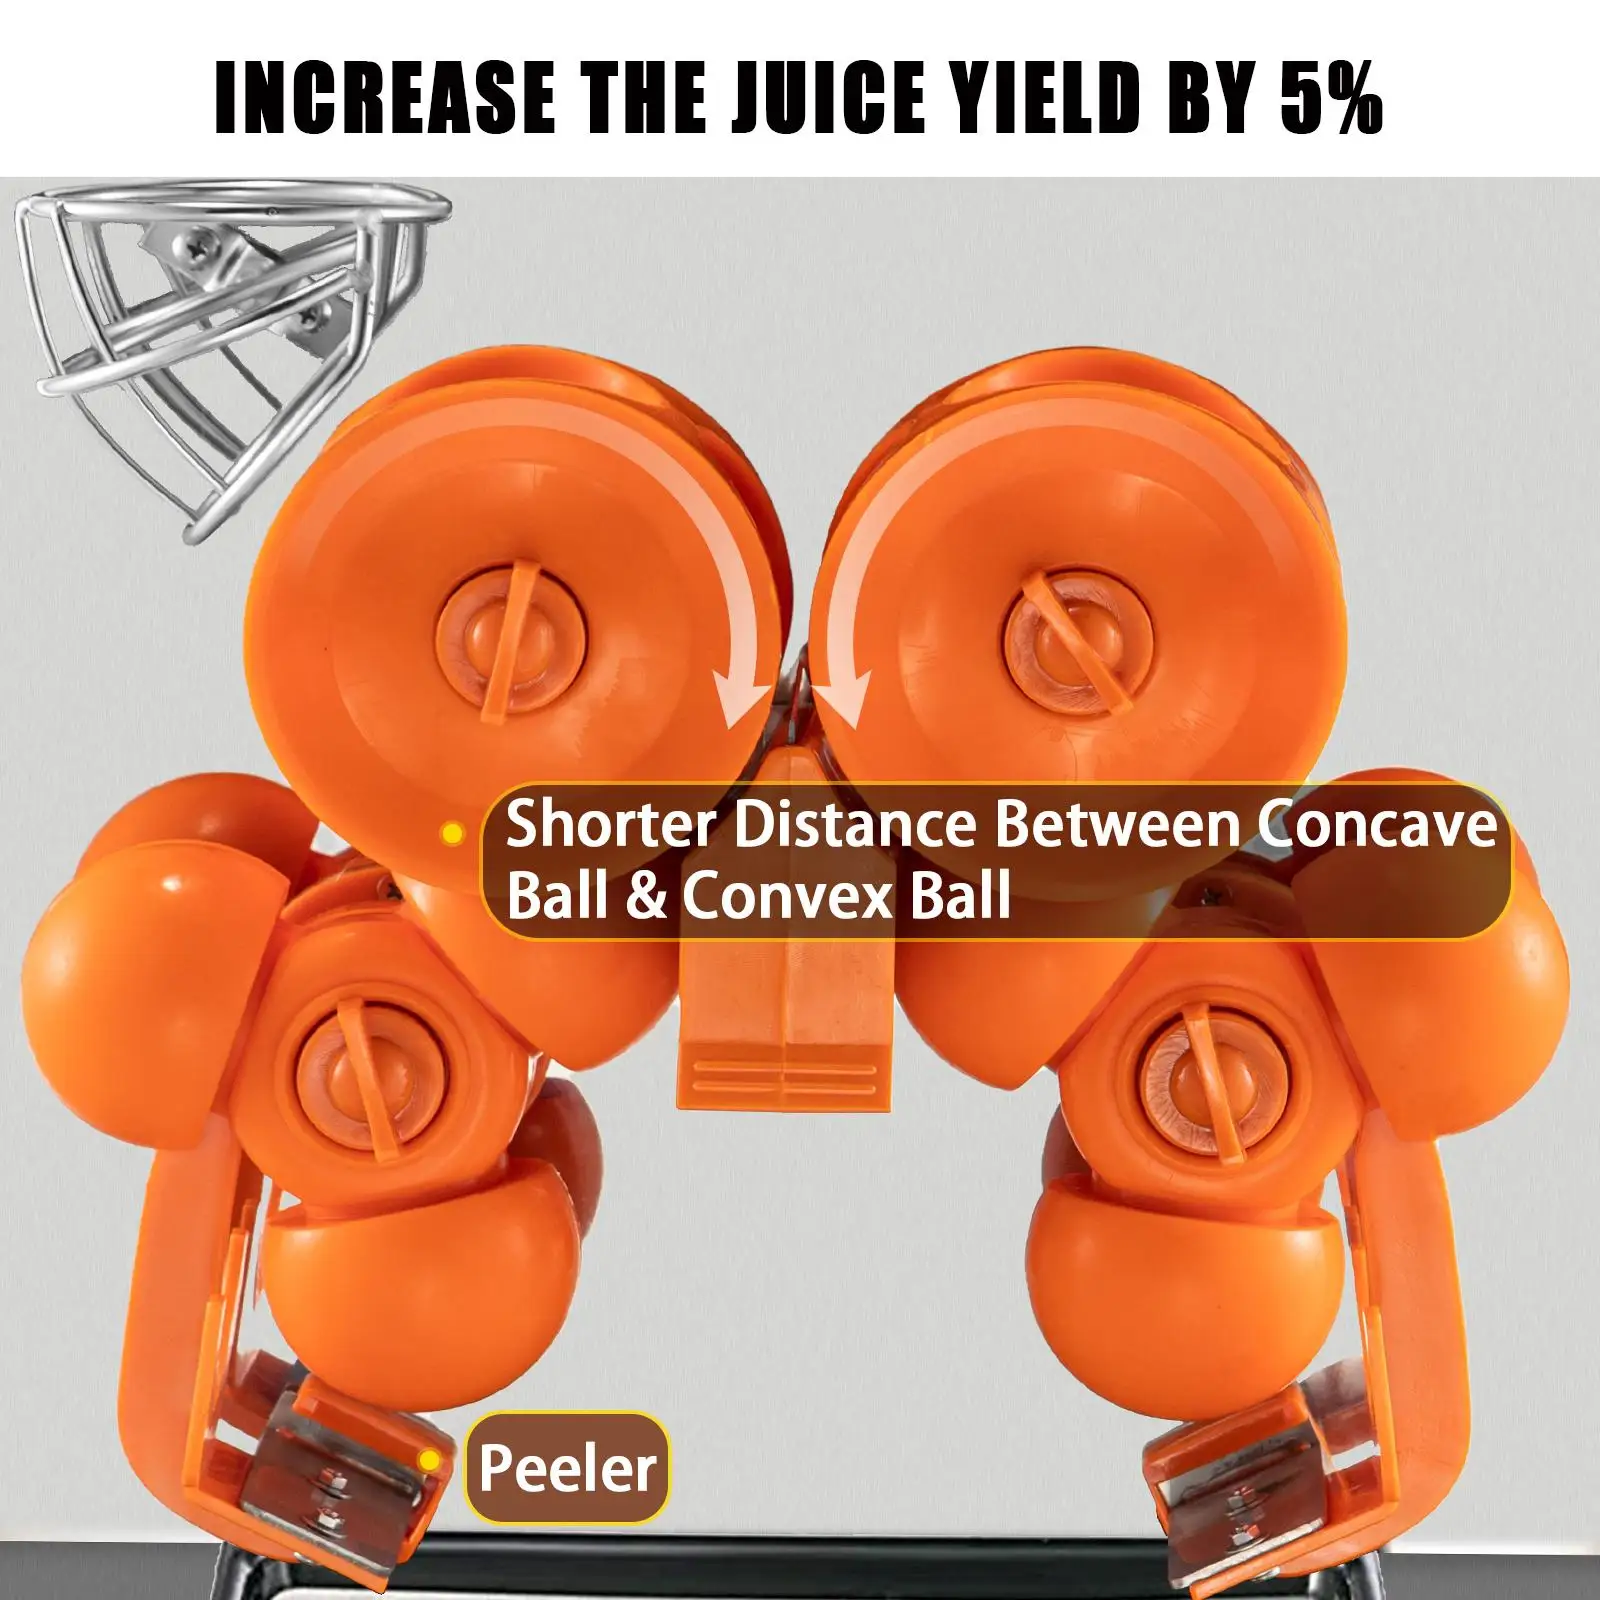 Commercial orange juicer machine